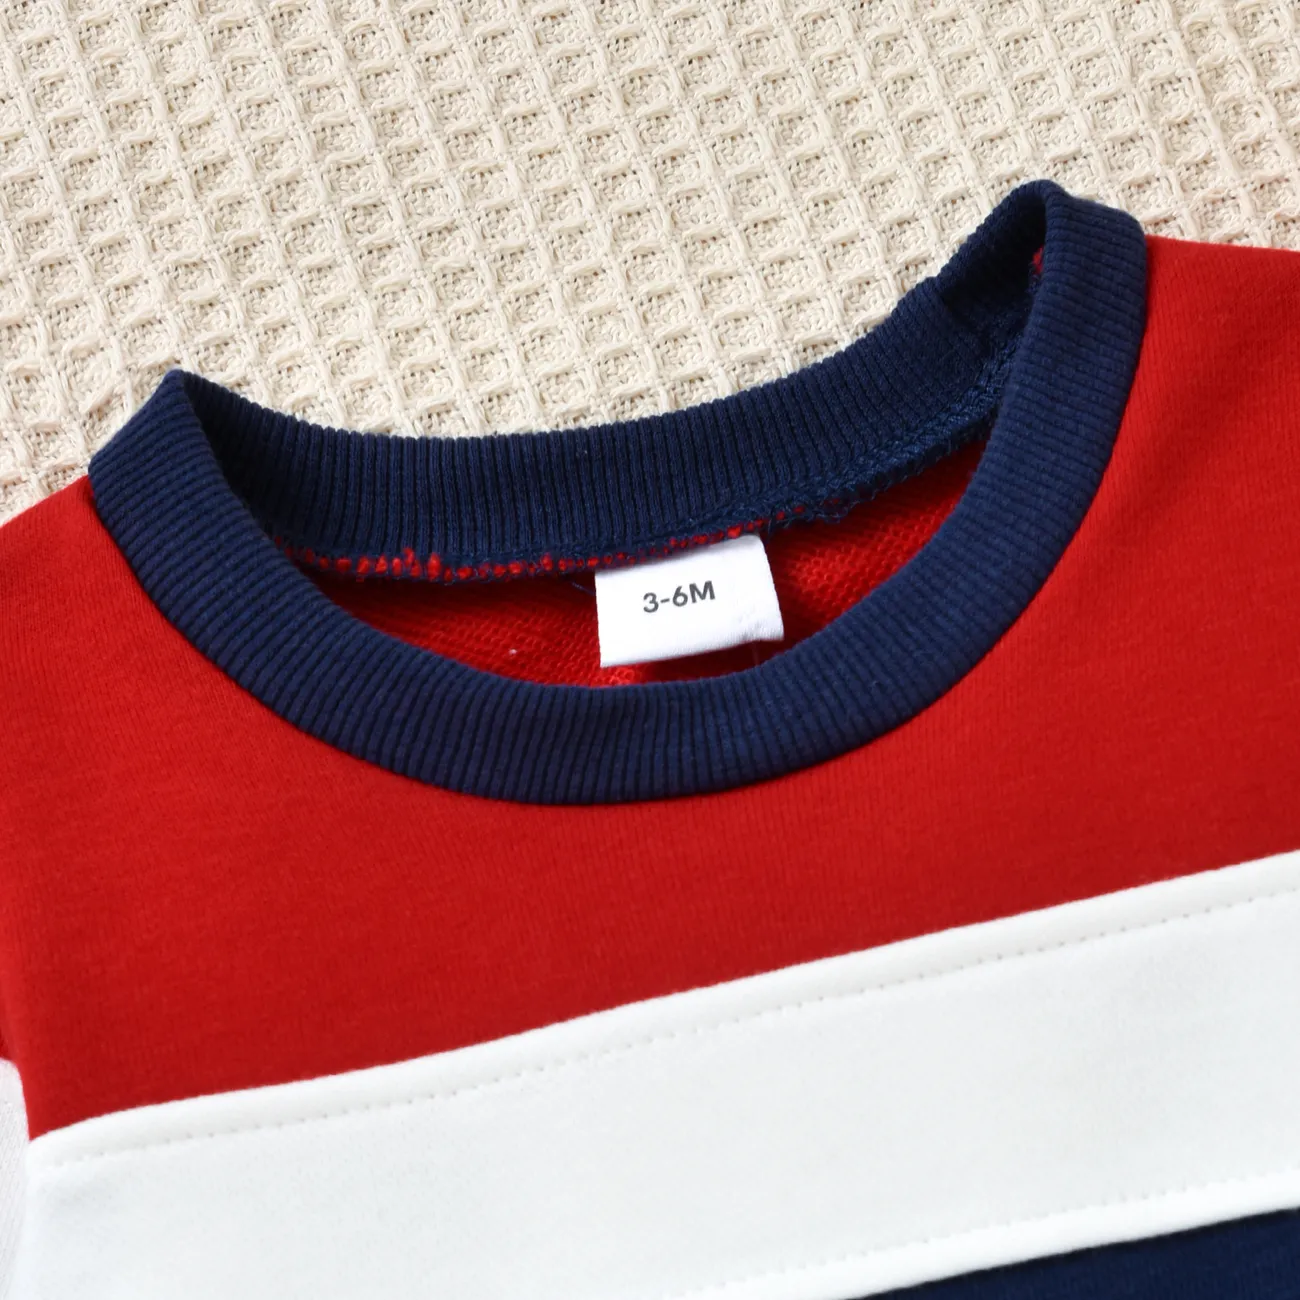 2pcs Baby Colorblock Long-sleeve Sweatshirt and Sweatpants Set Red big image 1